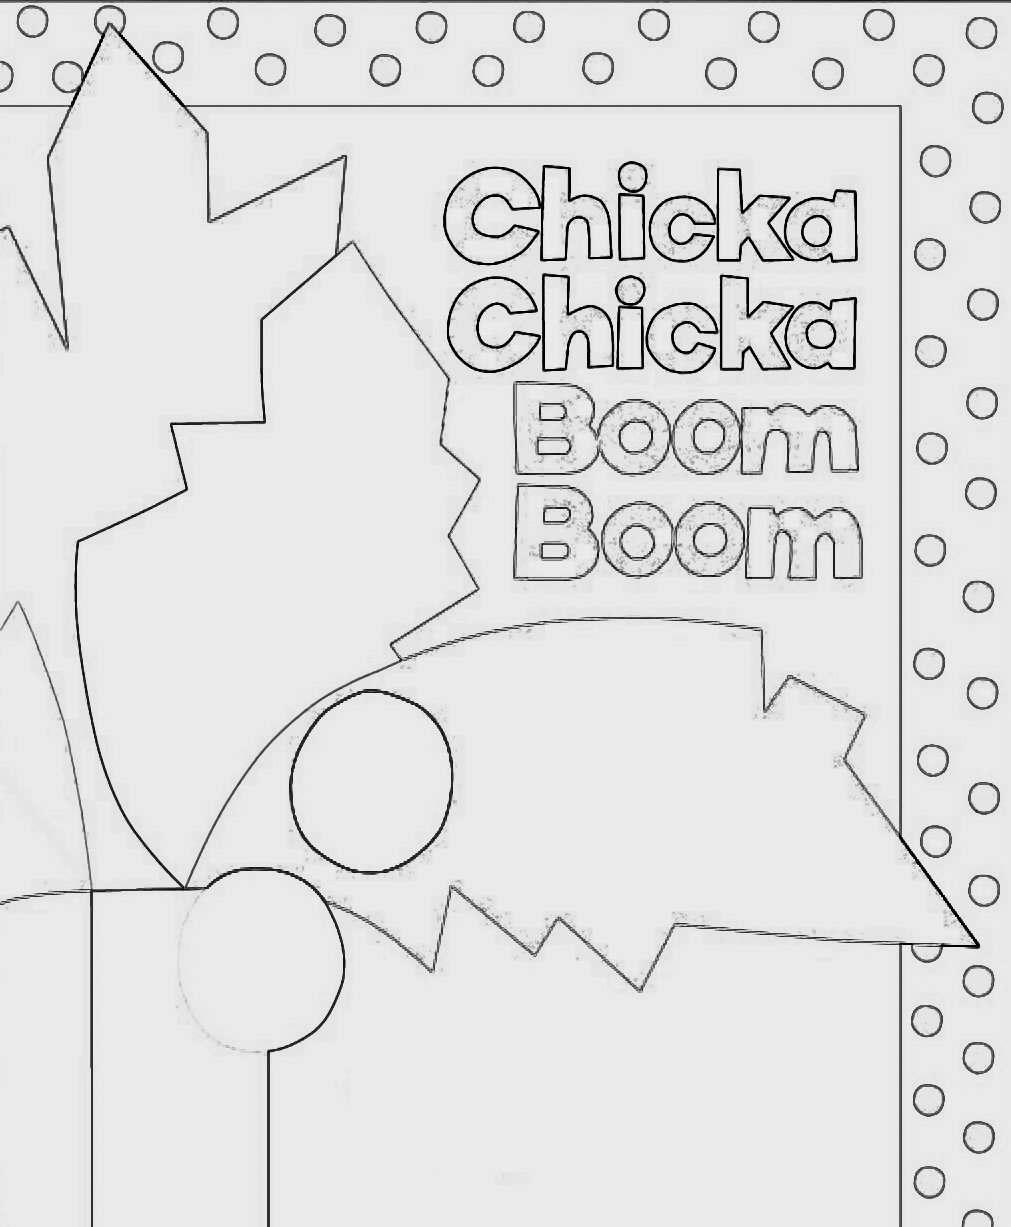 chicka-chicka-boom-boom-coloring-page-coloring-home